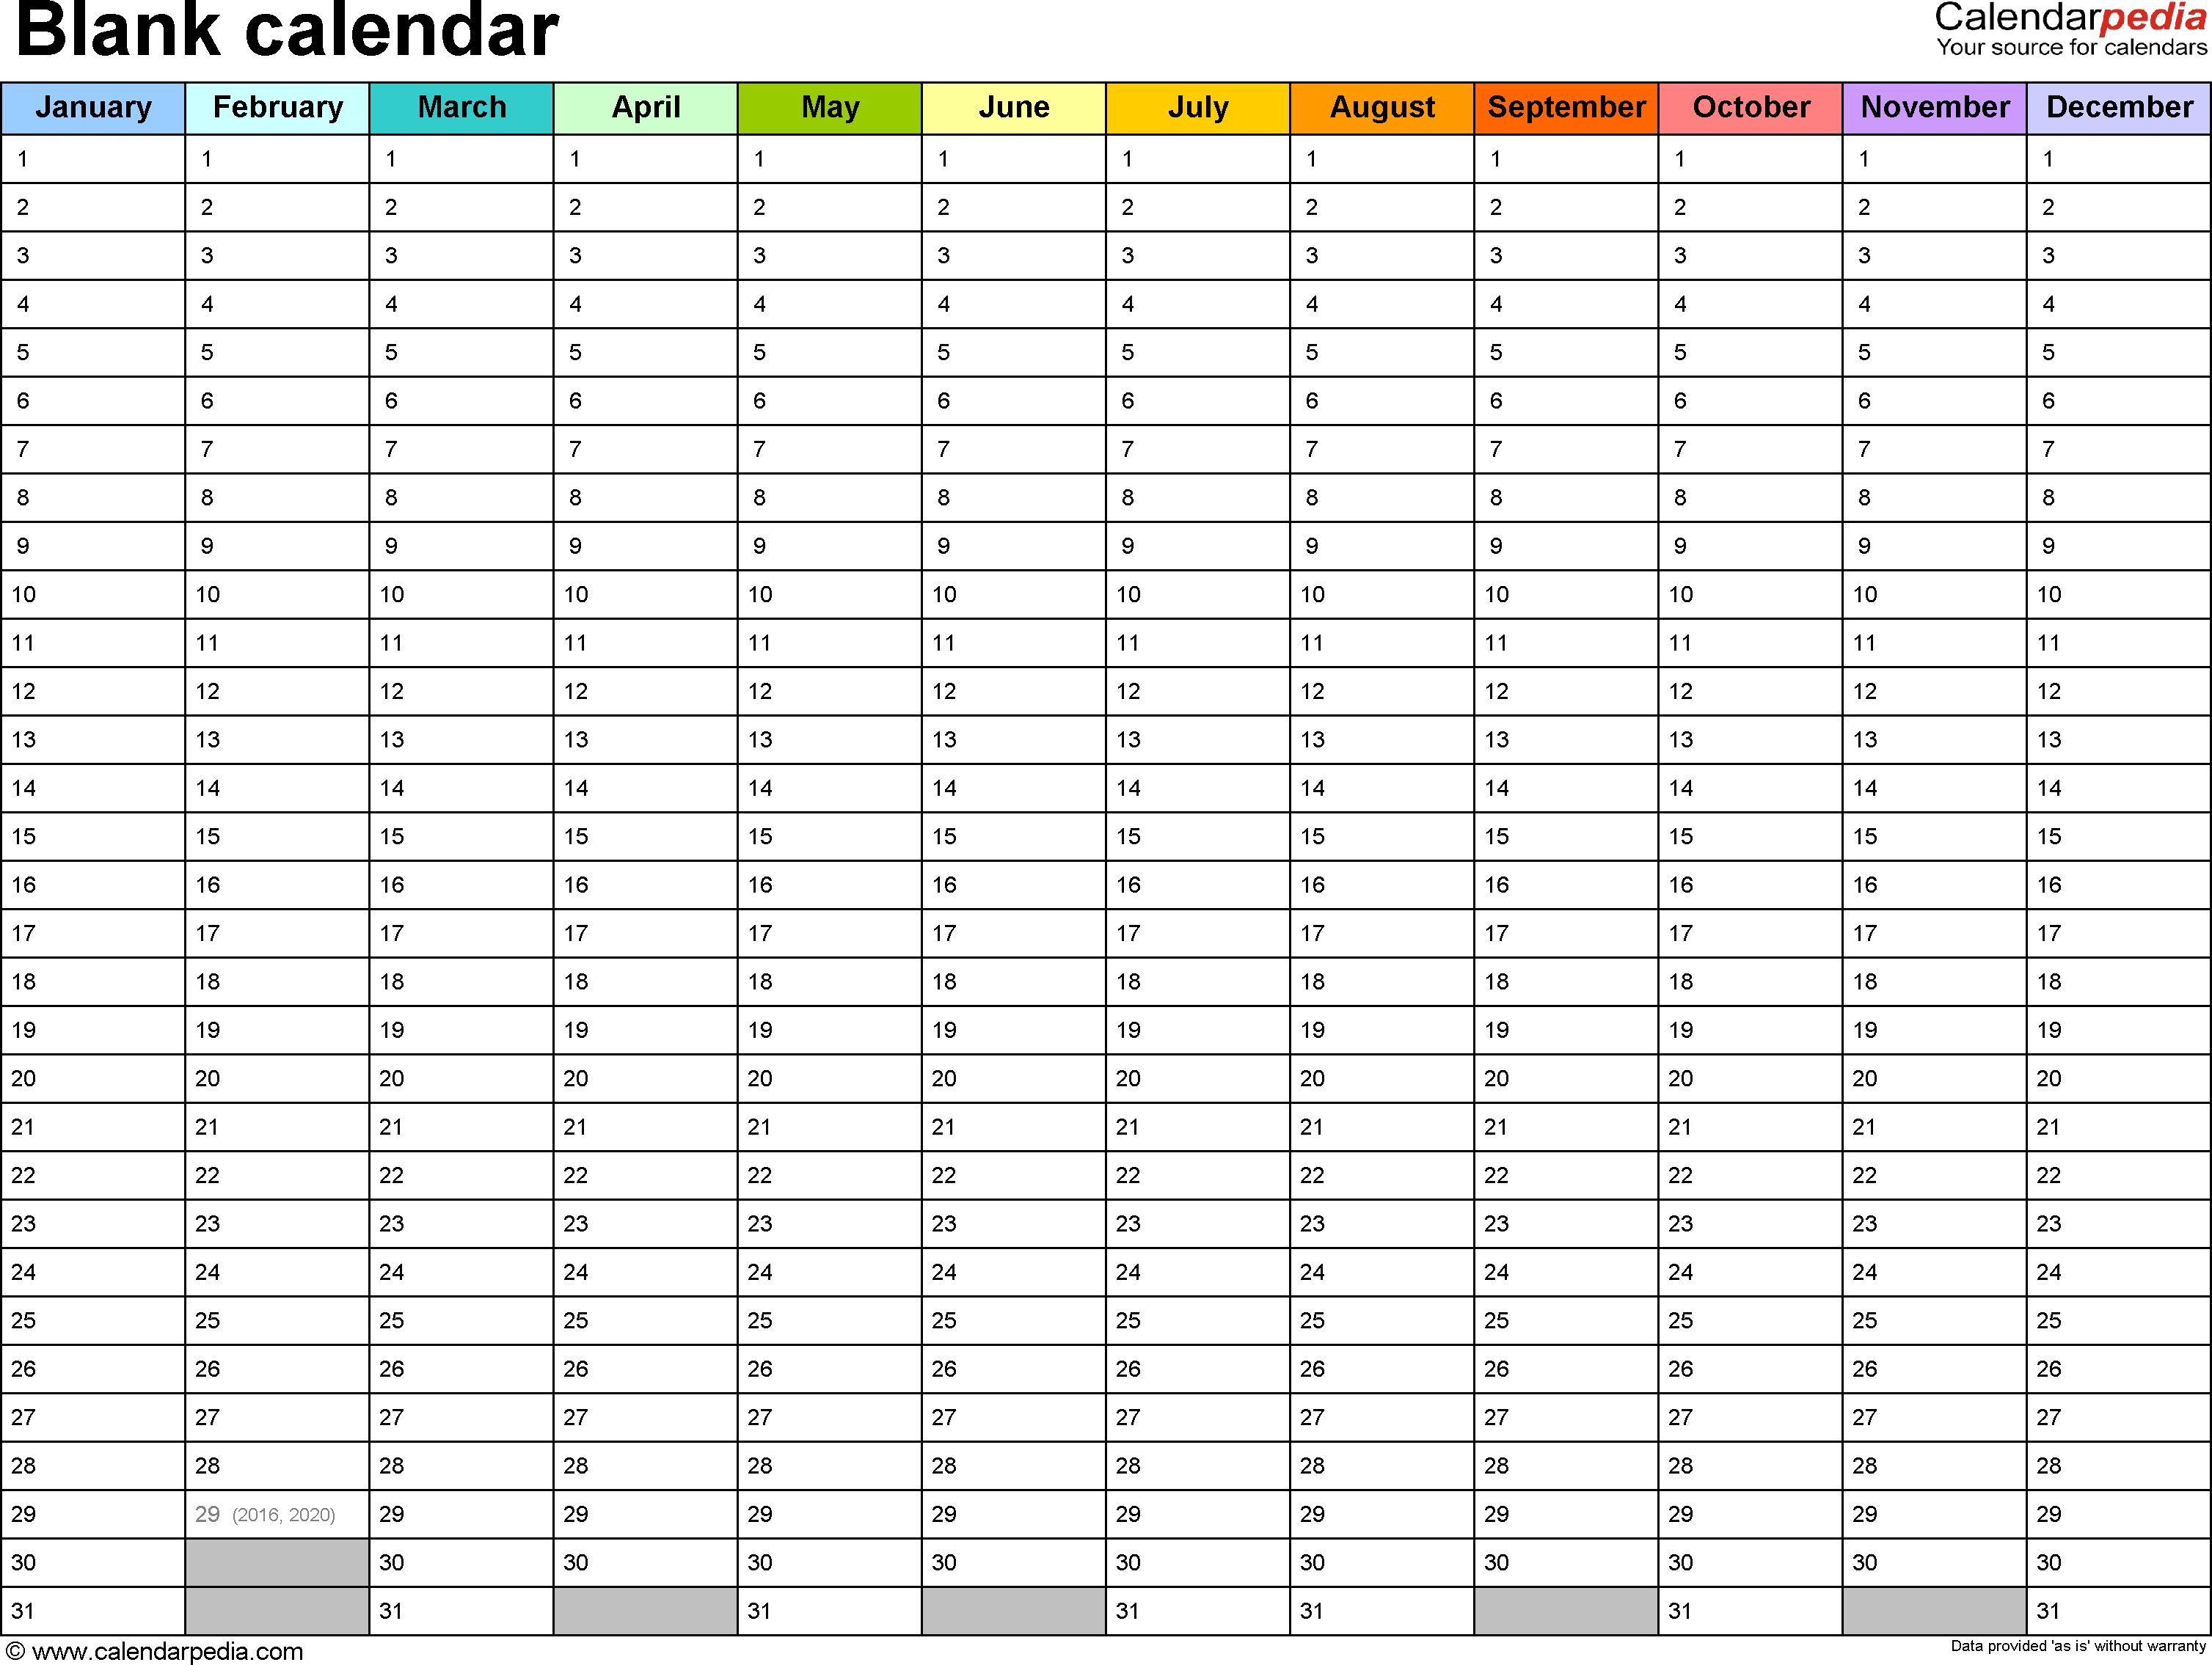 Blank Calendar - 9 Free Printable Microsoft Word Templates intended for 12 Month Blank Calendar Template